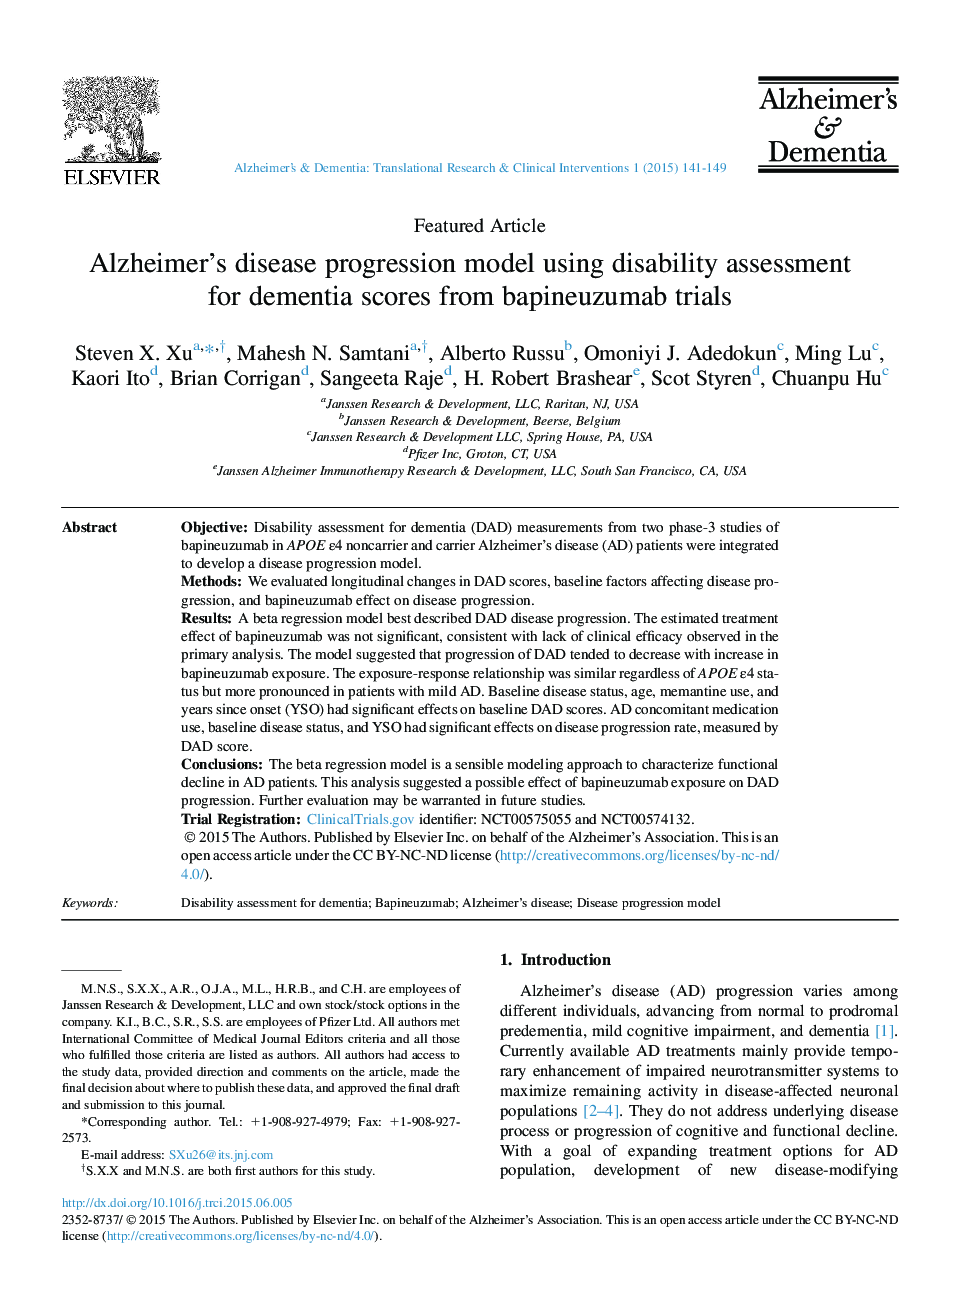 Alzheimer's disease progression model using disability assessment for dementia scores from bapineuzumab trials 